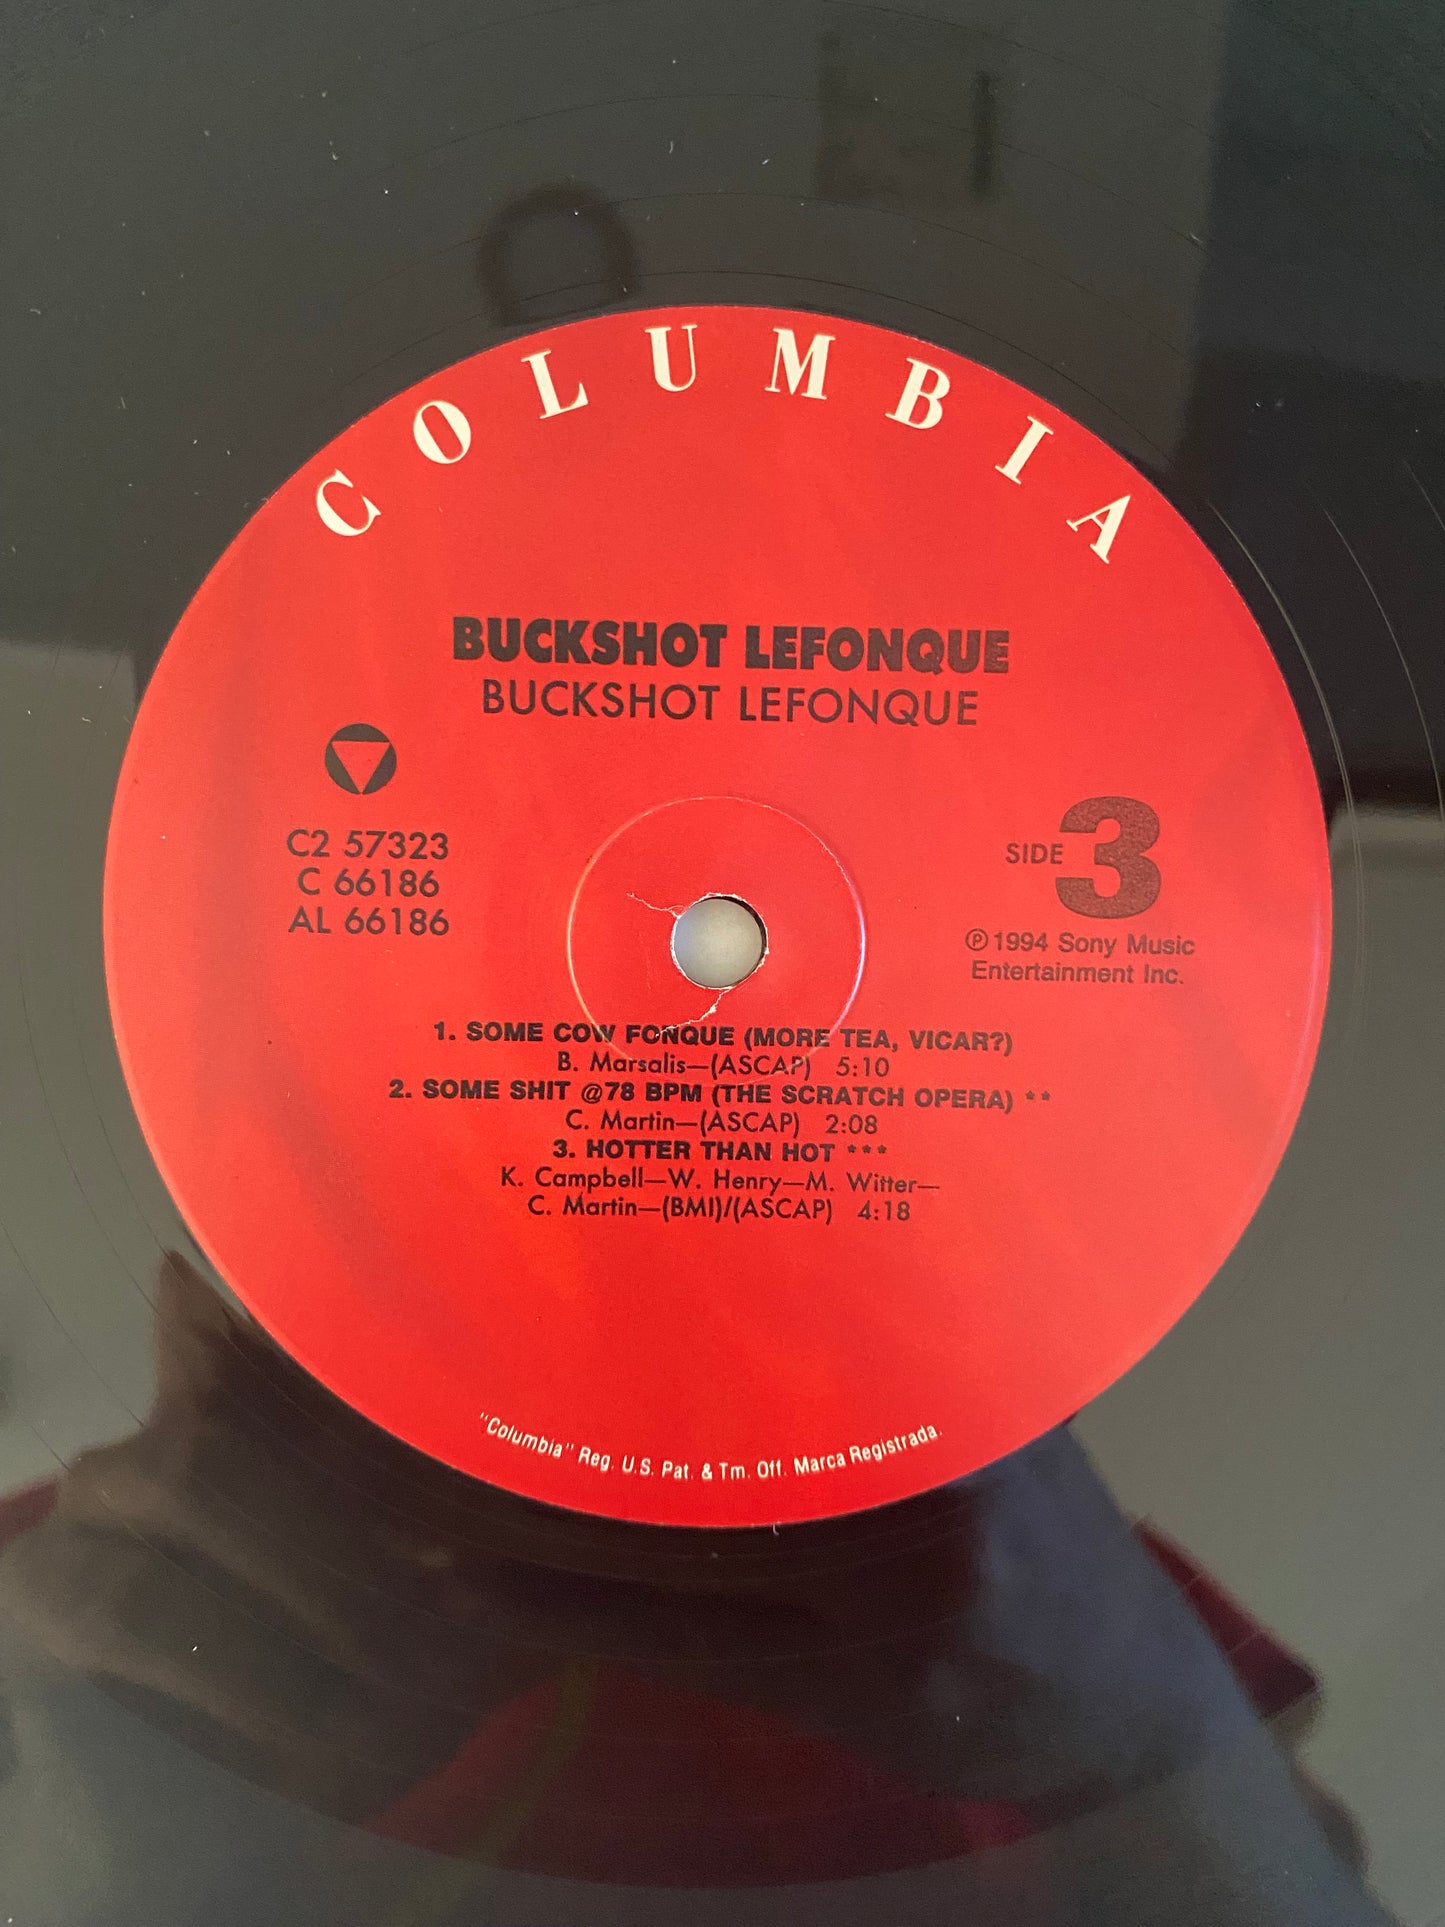 Buckshot LeFonque - Buckshot LeFonque (2xLP, Album). HIP-HOP